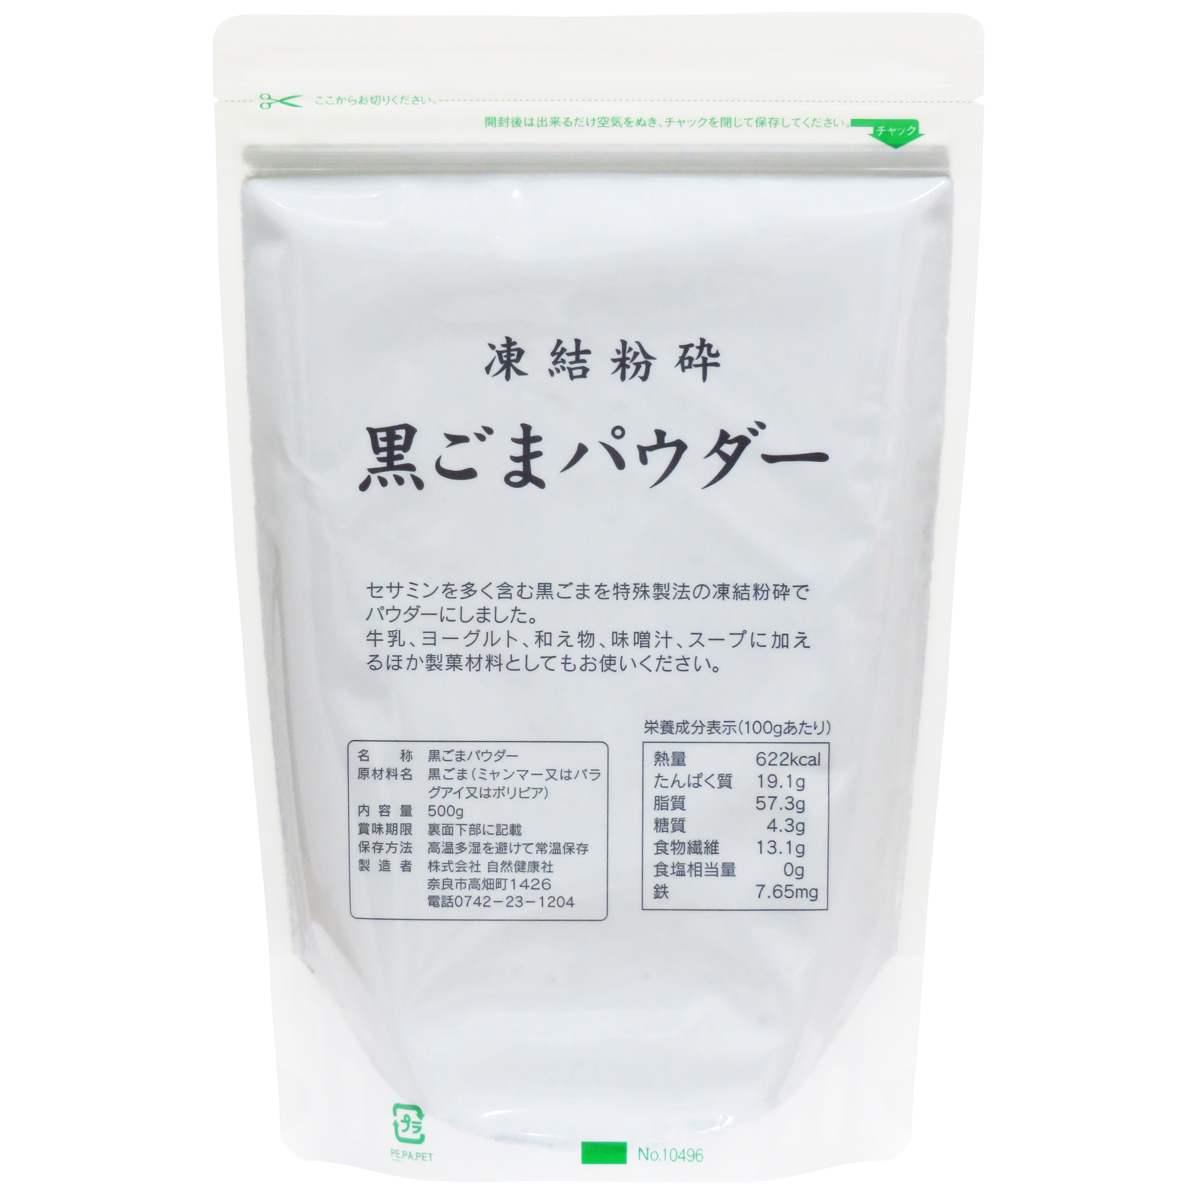  black sesame powder 500g black sesame powder sesamin supplement black . flax 